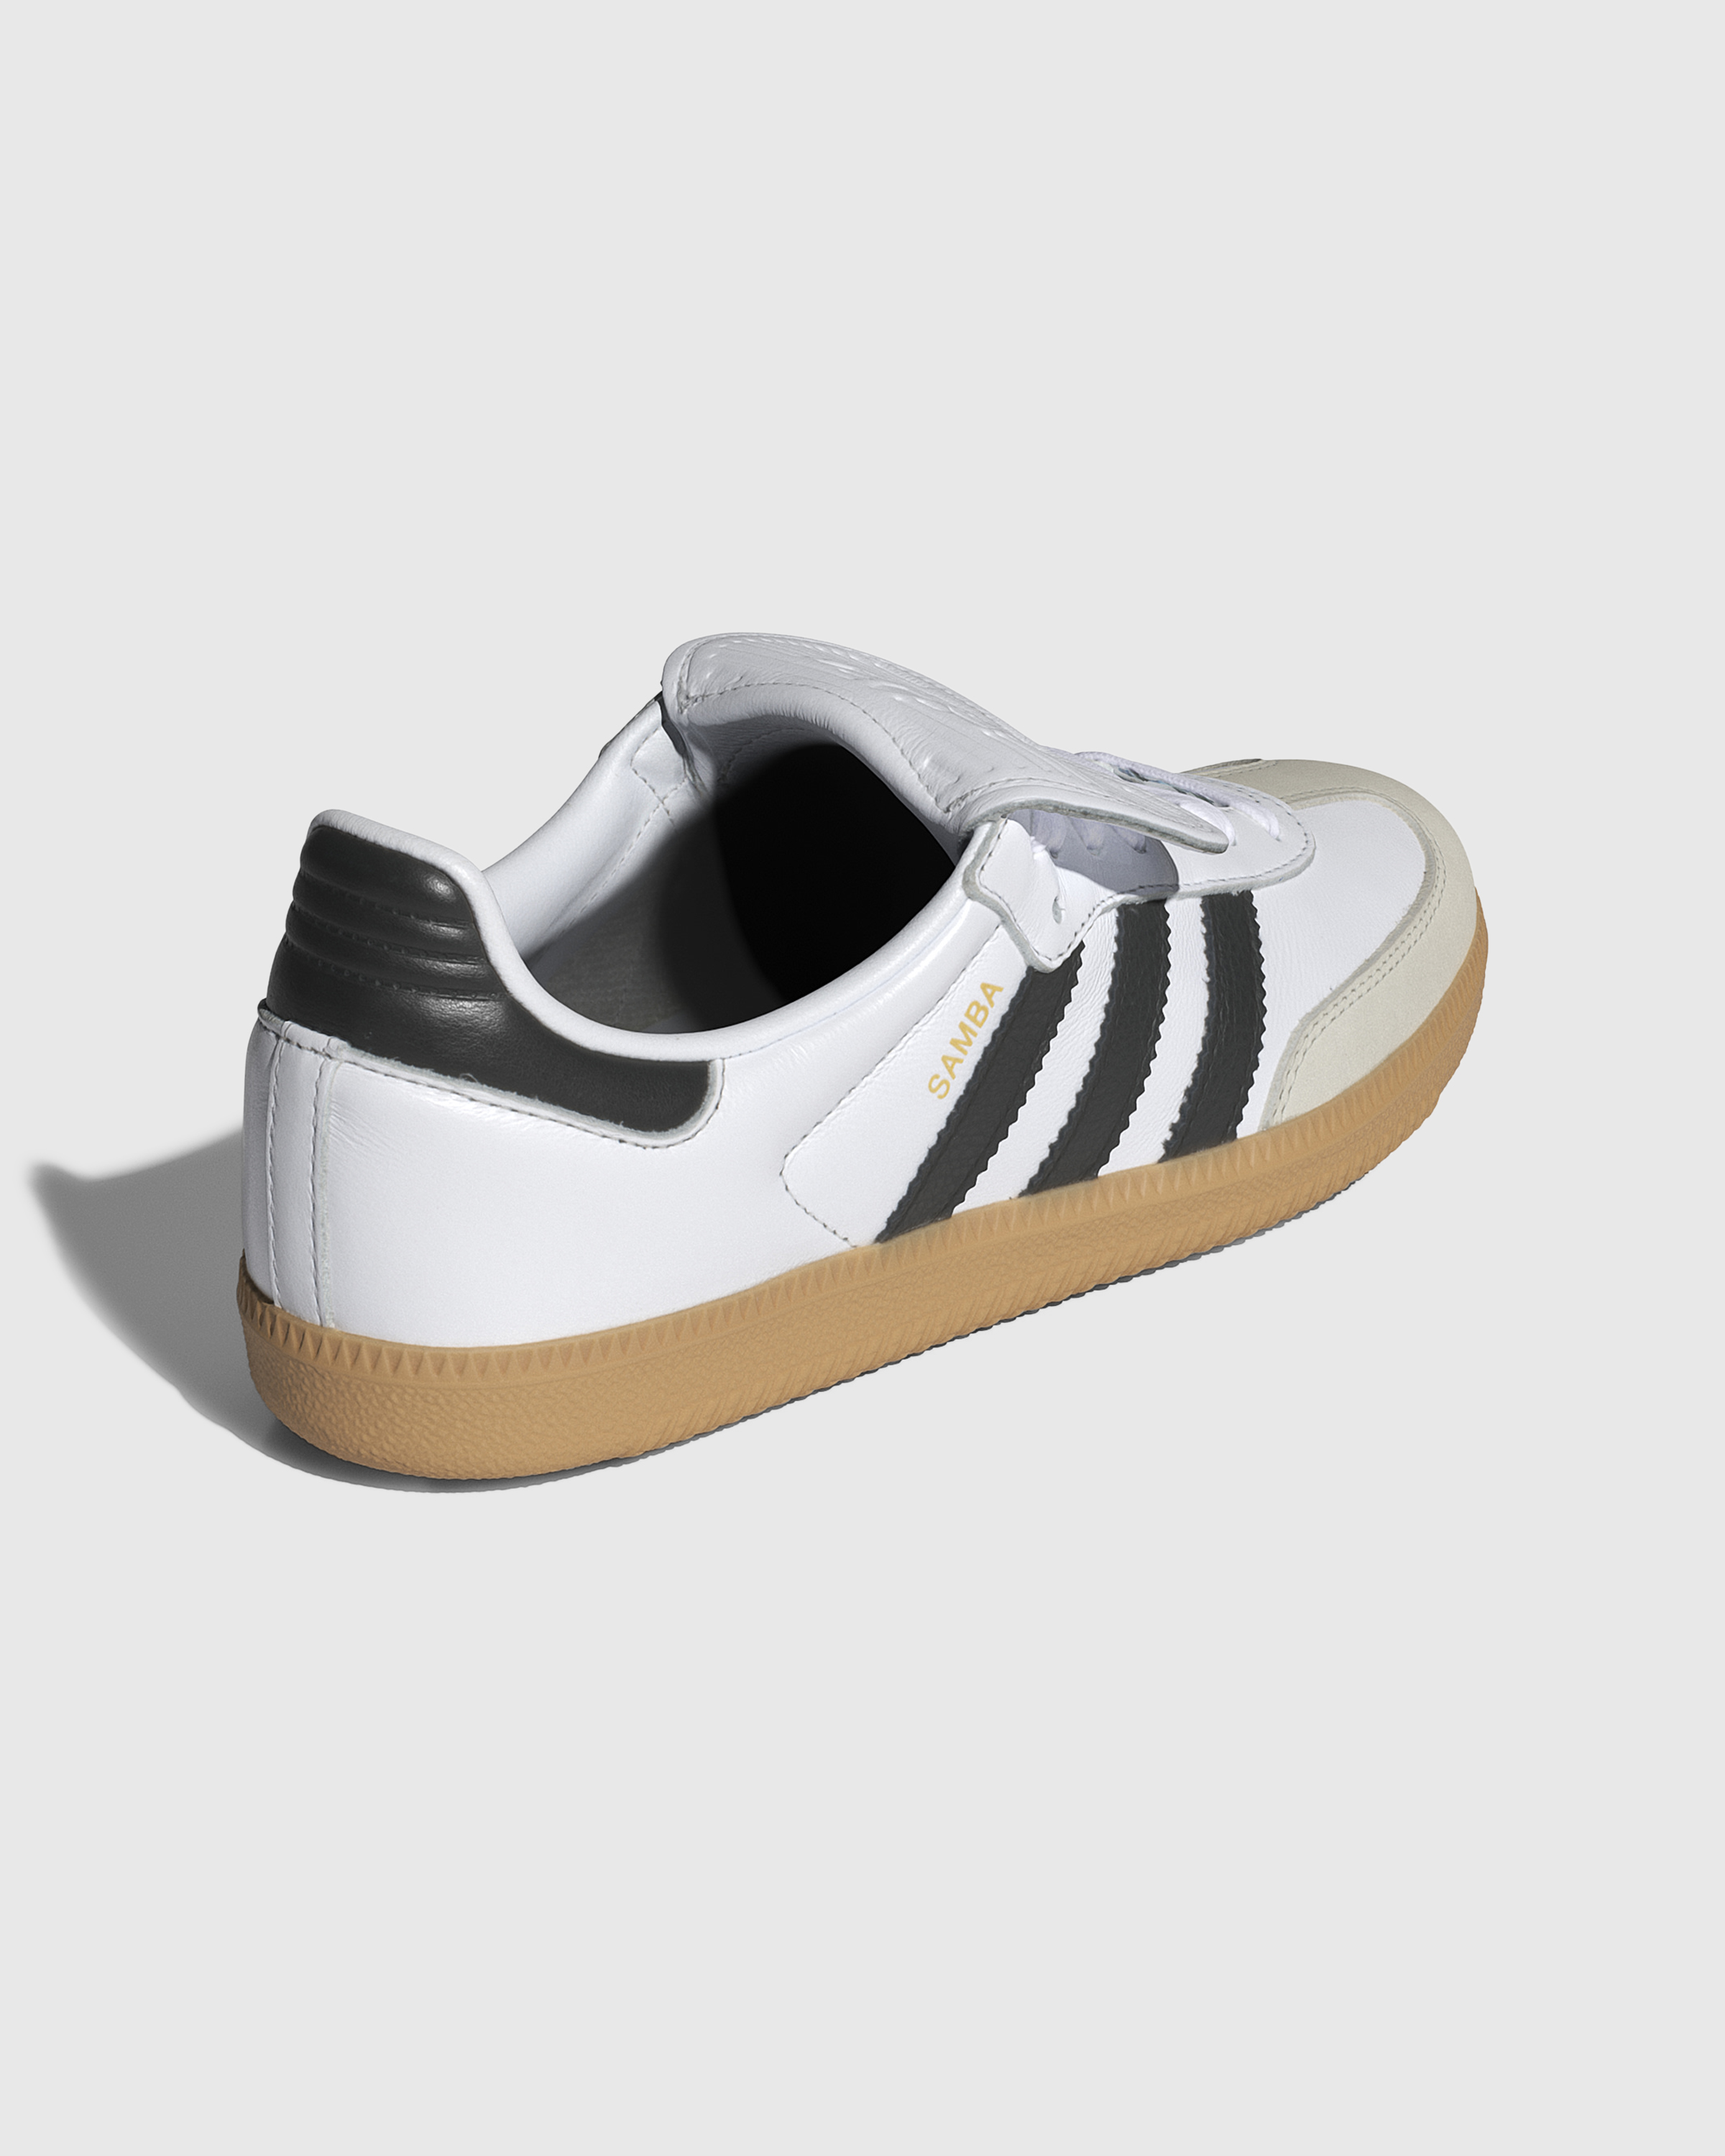 Adidas – Samba LT W White/Black/Gold - Low Top Sneakers - White - Image 4